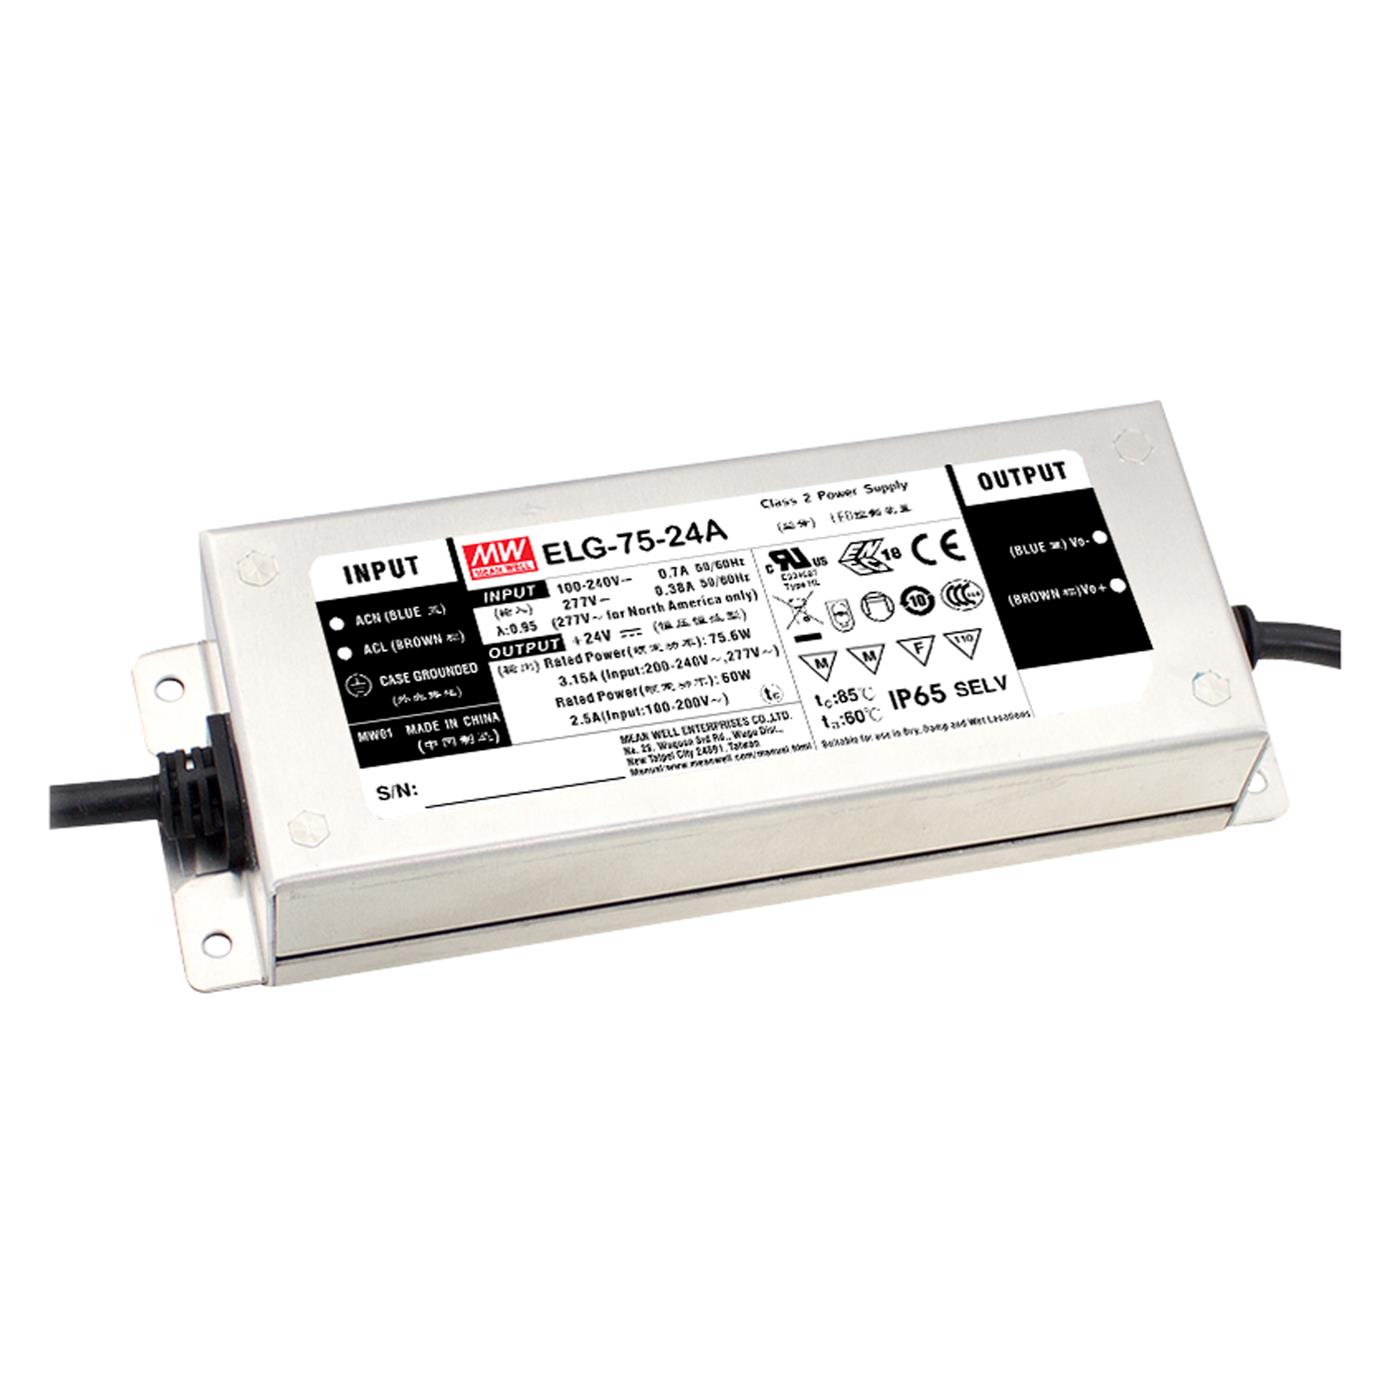 ELG-75-12A-3Y 60W 12V 5A LED Netzteil Trafo Treiber IP65 Dimmbar Potentiometer PWM